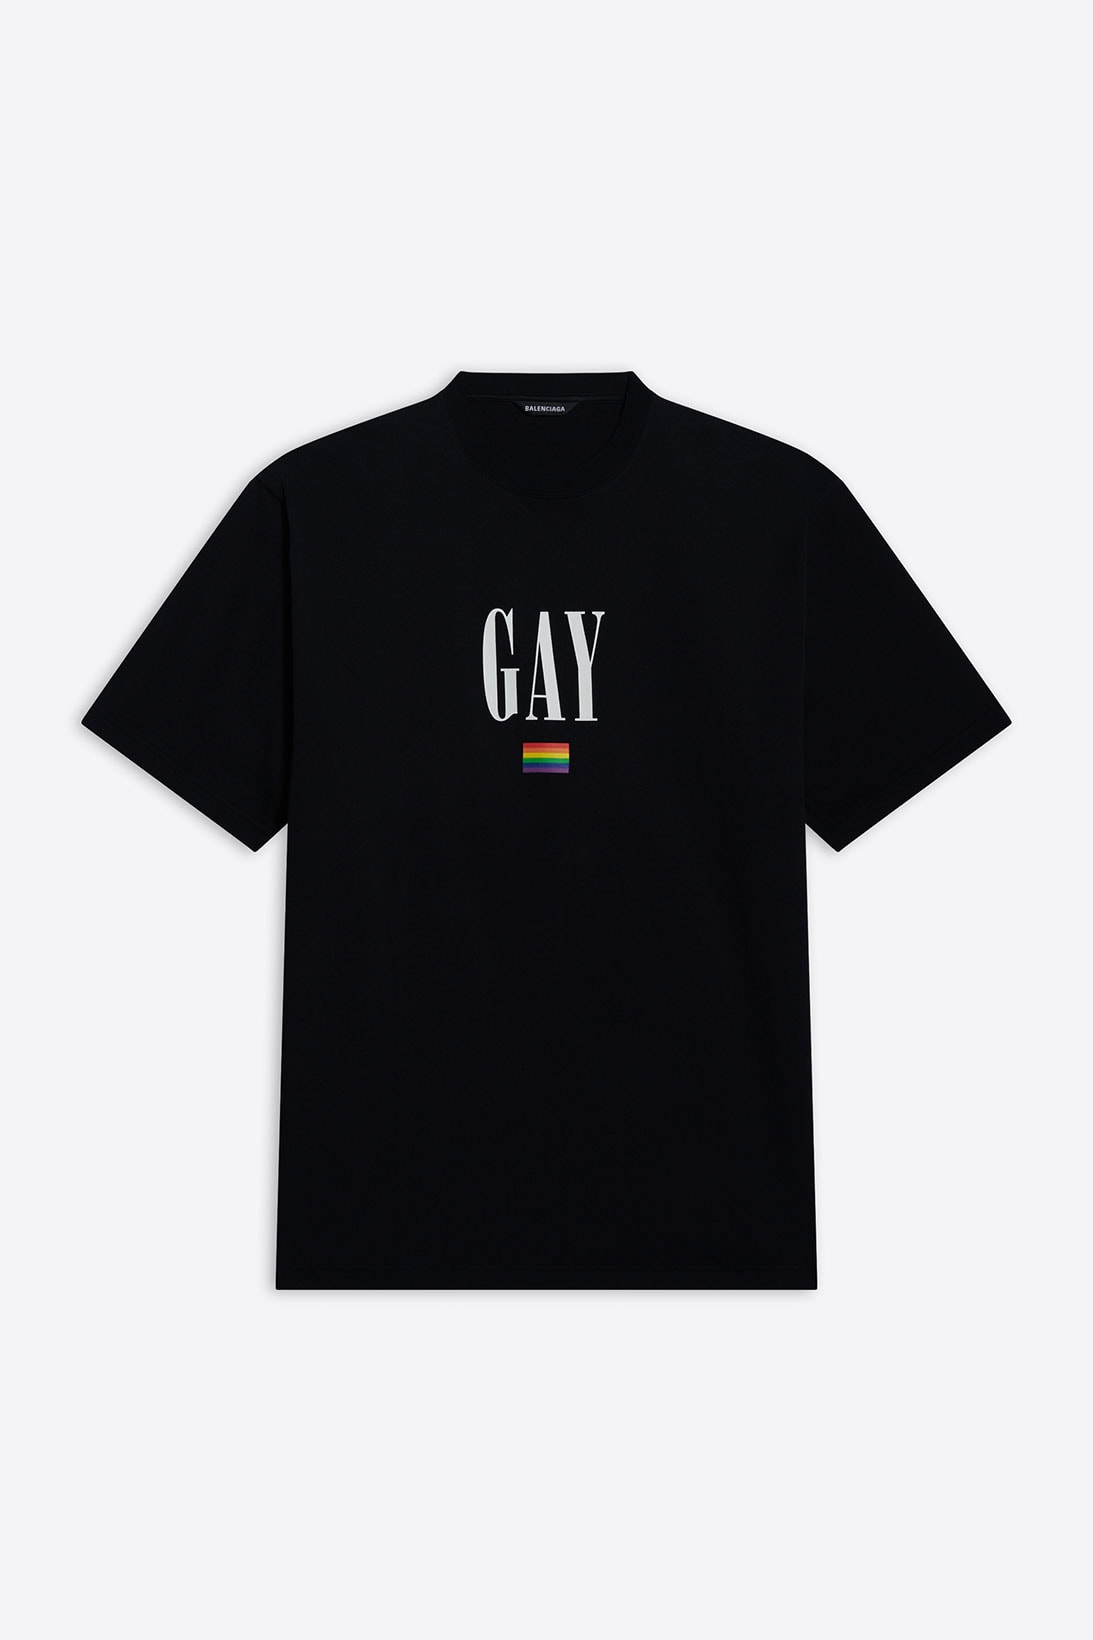 balenciaga pre-fall 2021 collection pride month capsule t-shirt